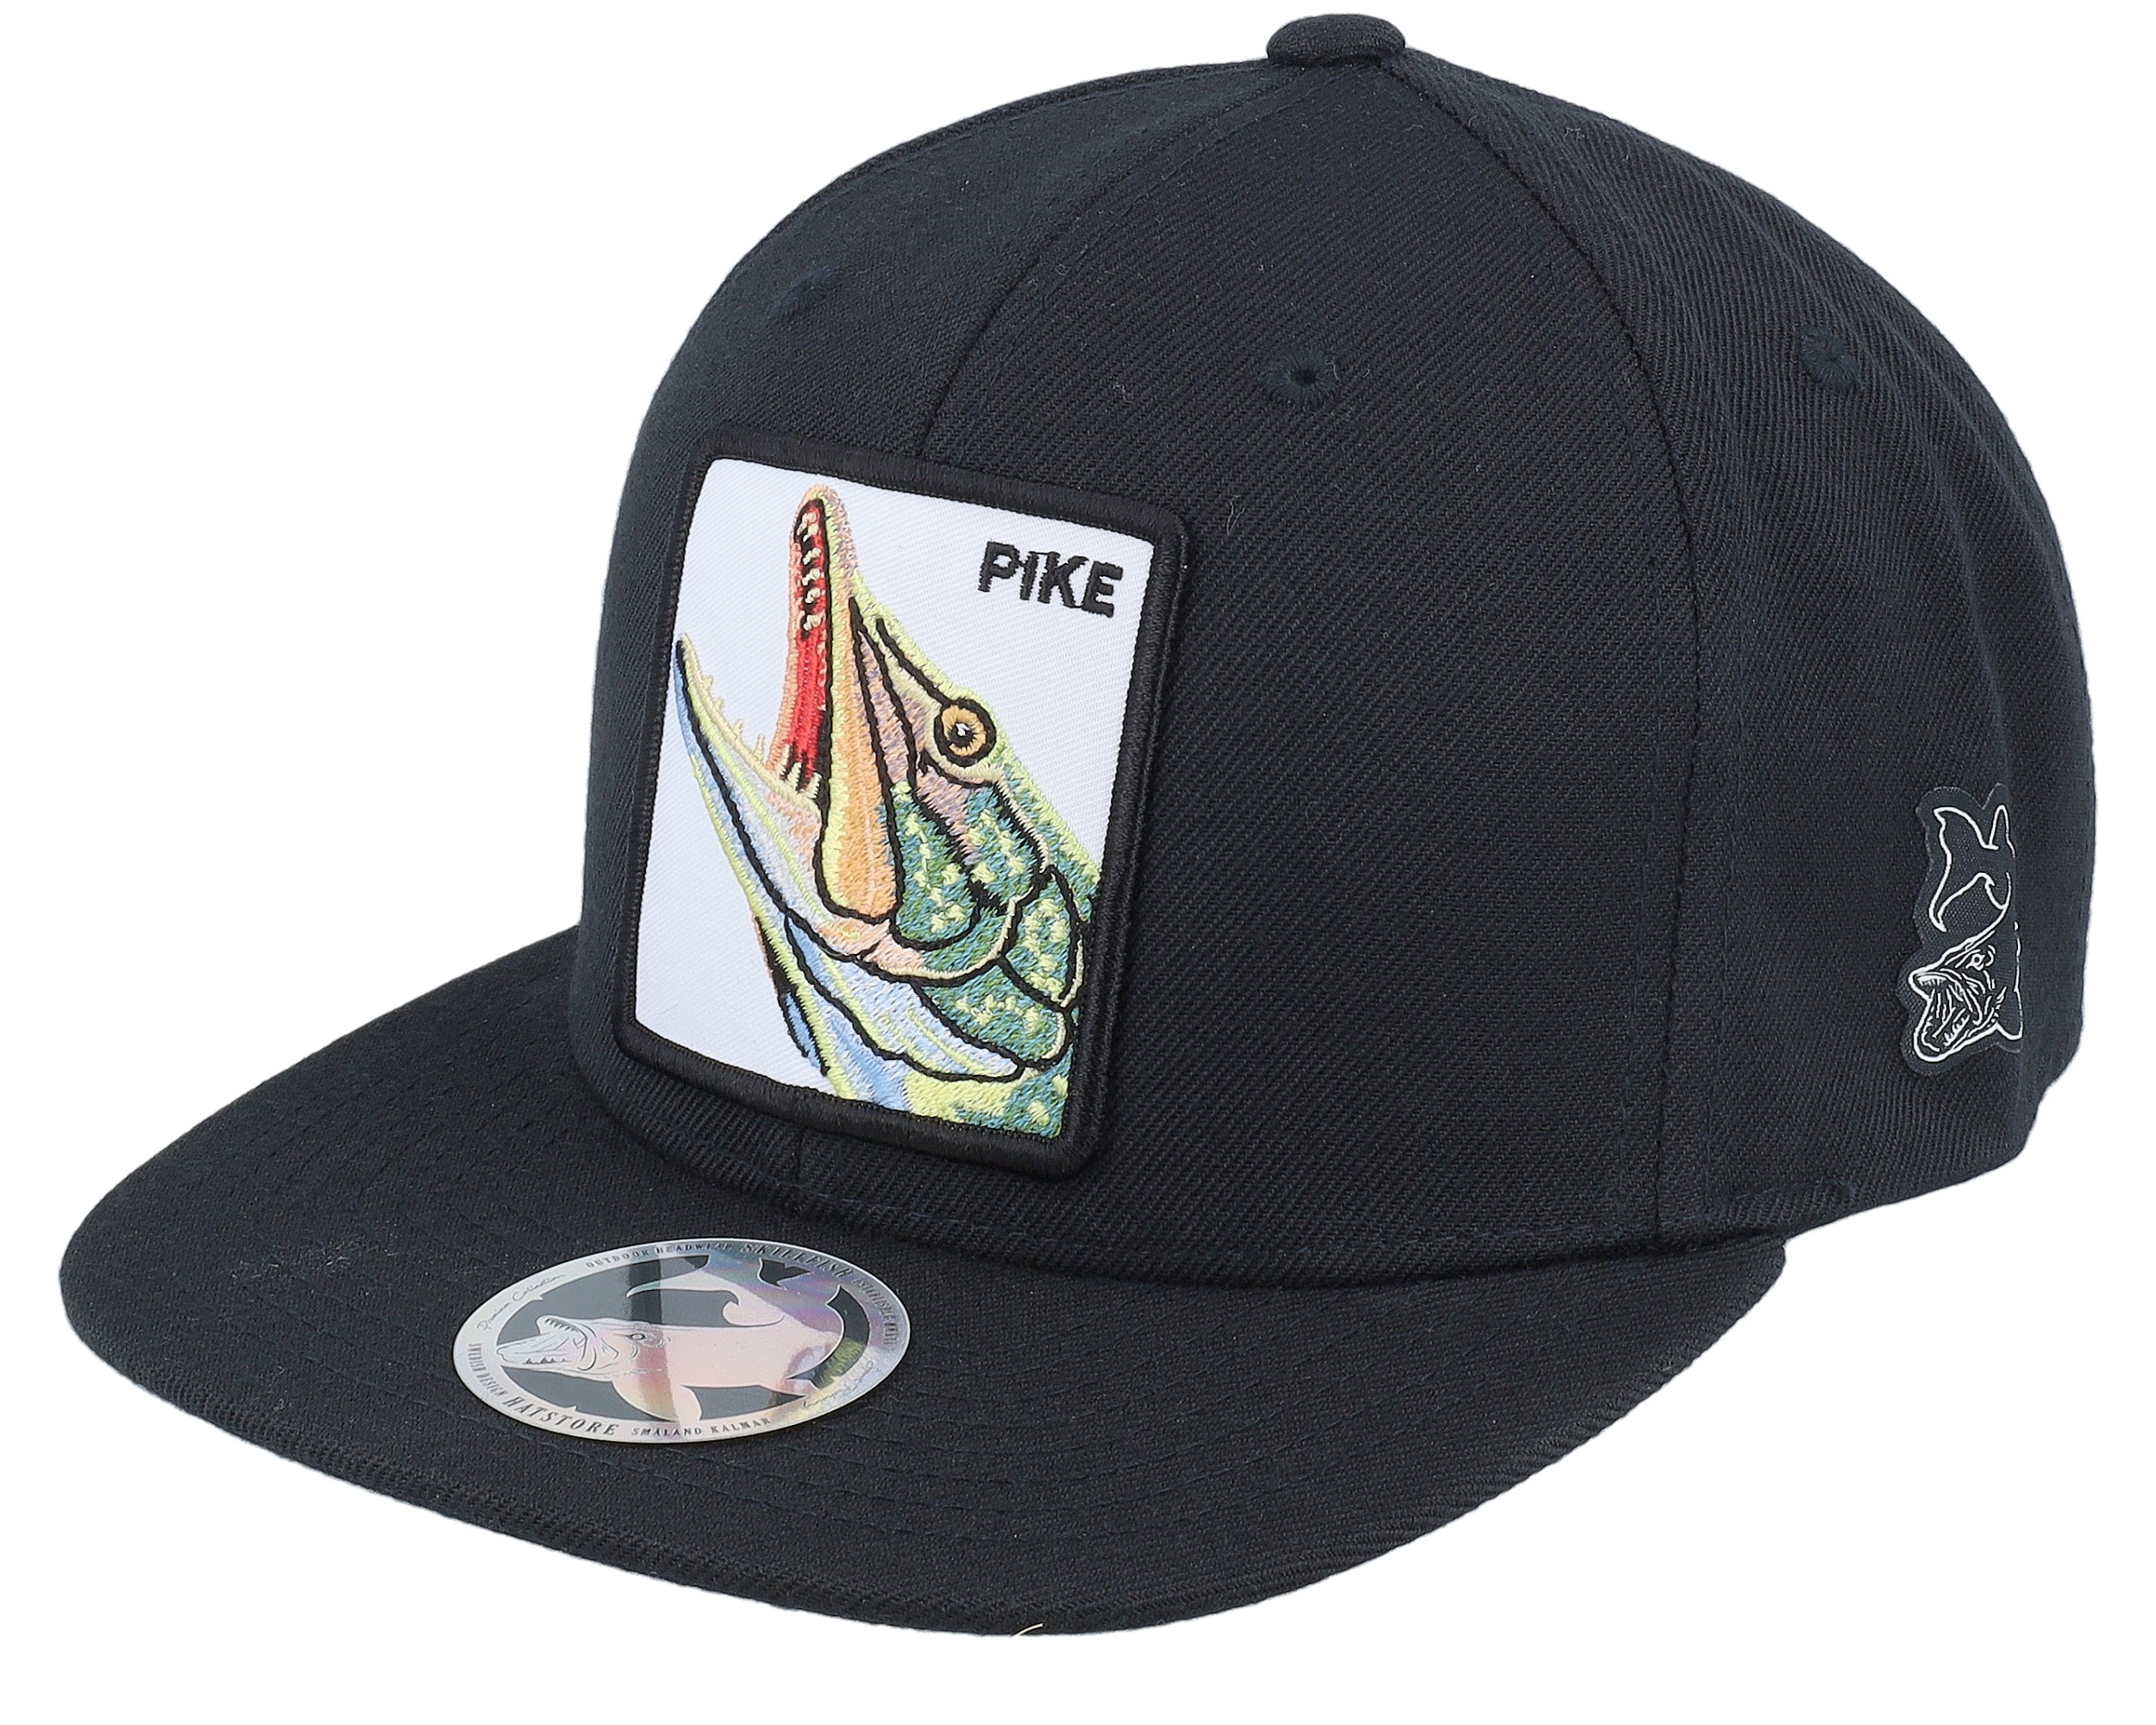 Kids Pike Pro Fishing Black Snapback - Skillfish cap